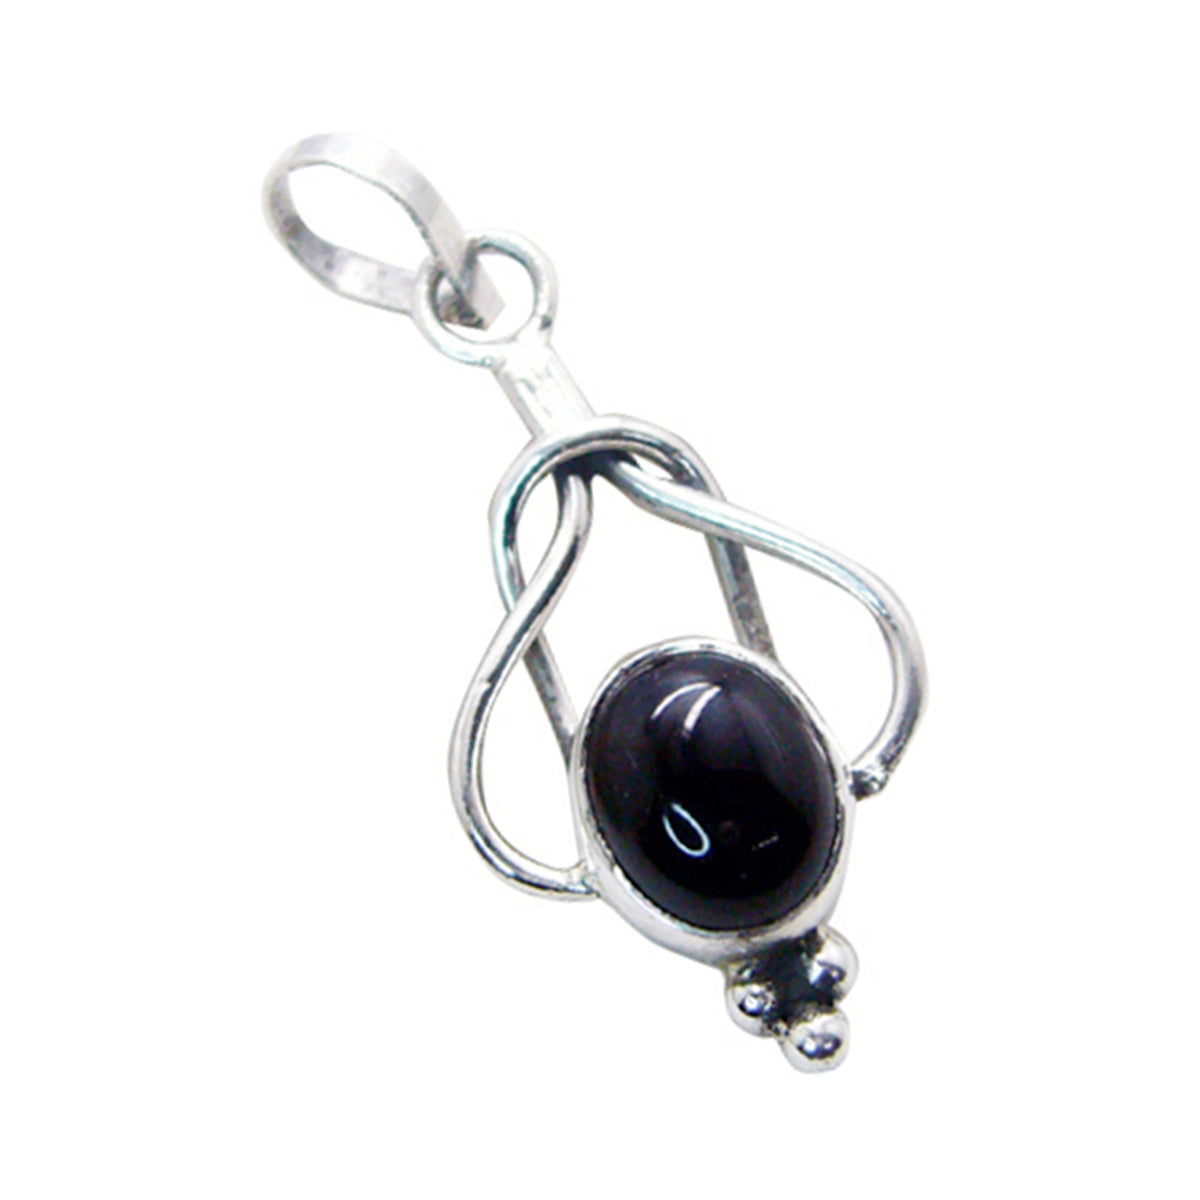 Riyo Attractive Gemstone Oval Cabochon Black Black Onyx 949 Sterling Silver Pendant Gift For Birthday